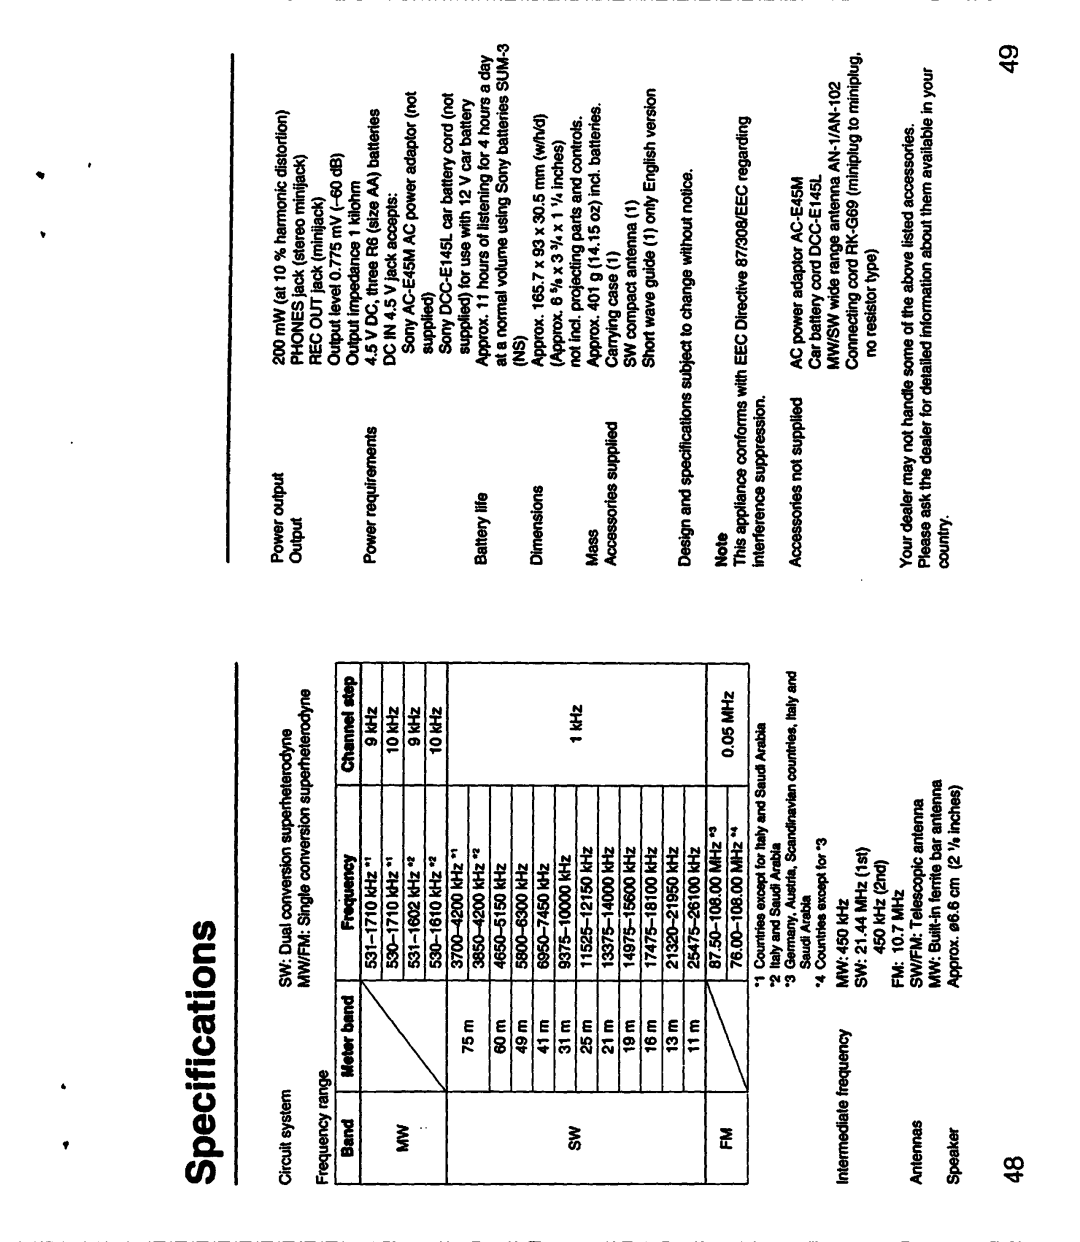 Sony ICF-SW33, 3-755-967-11(1) manual 